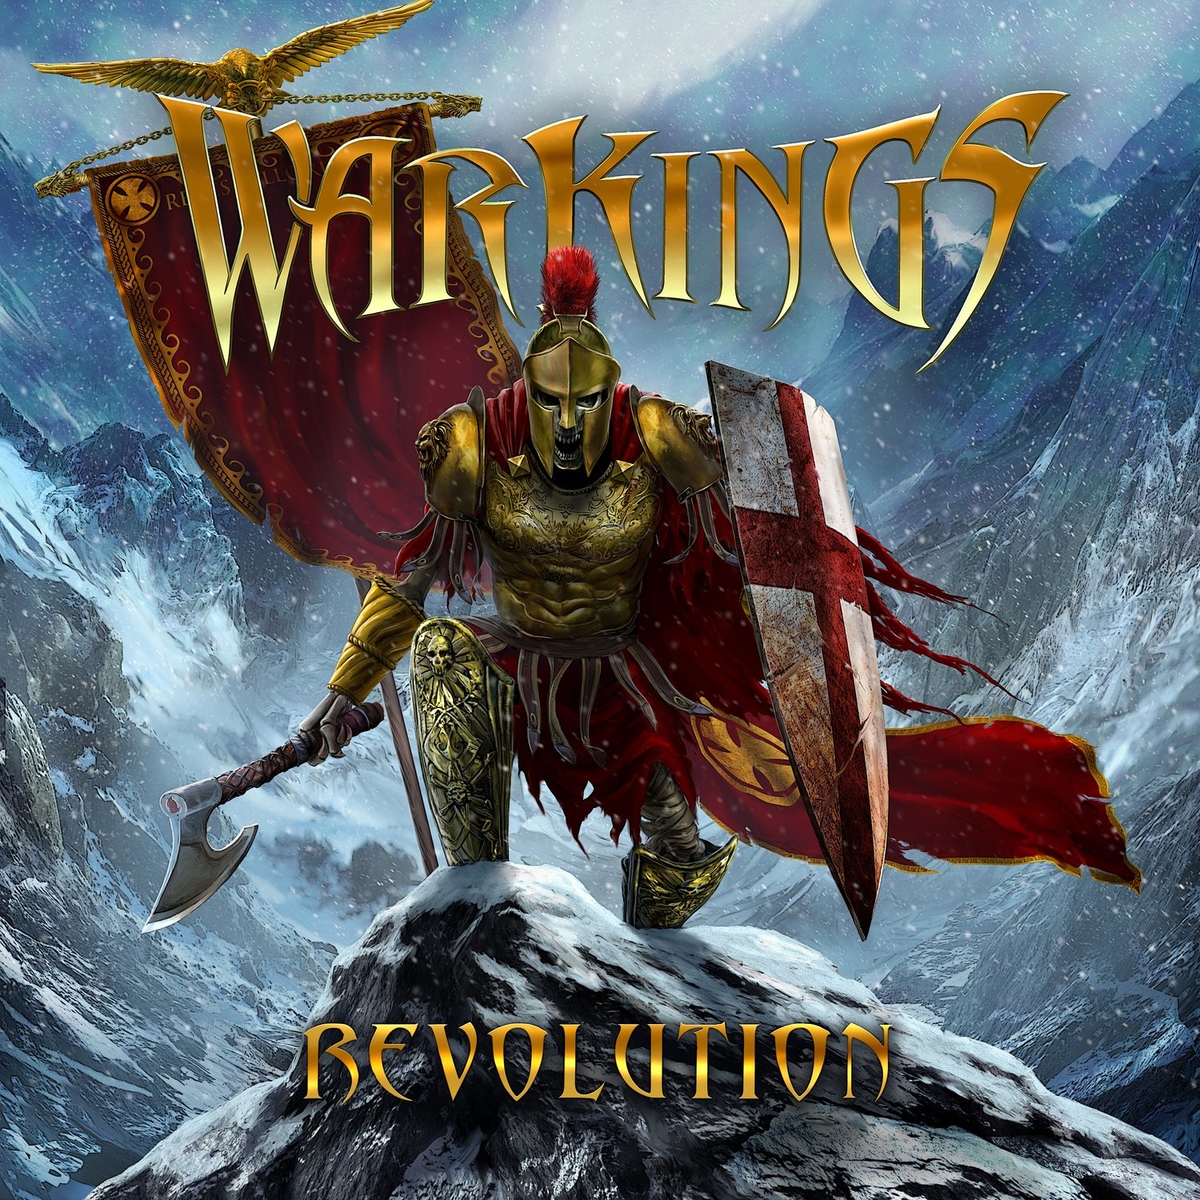 Review: Warkings “Revolution”